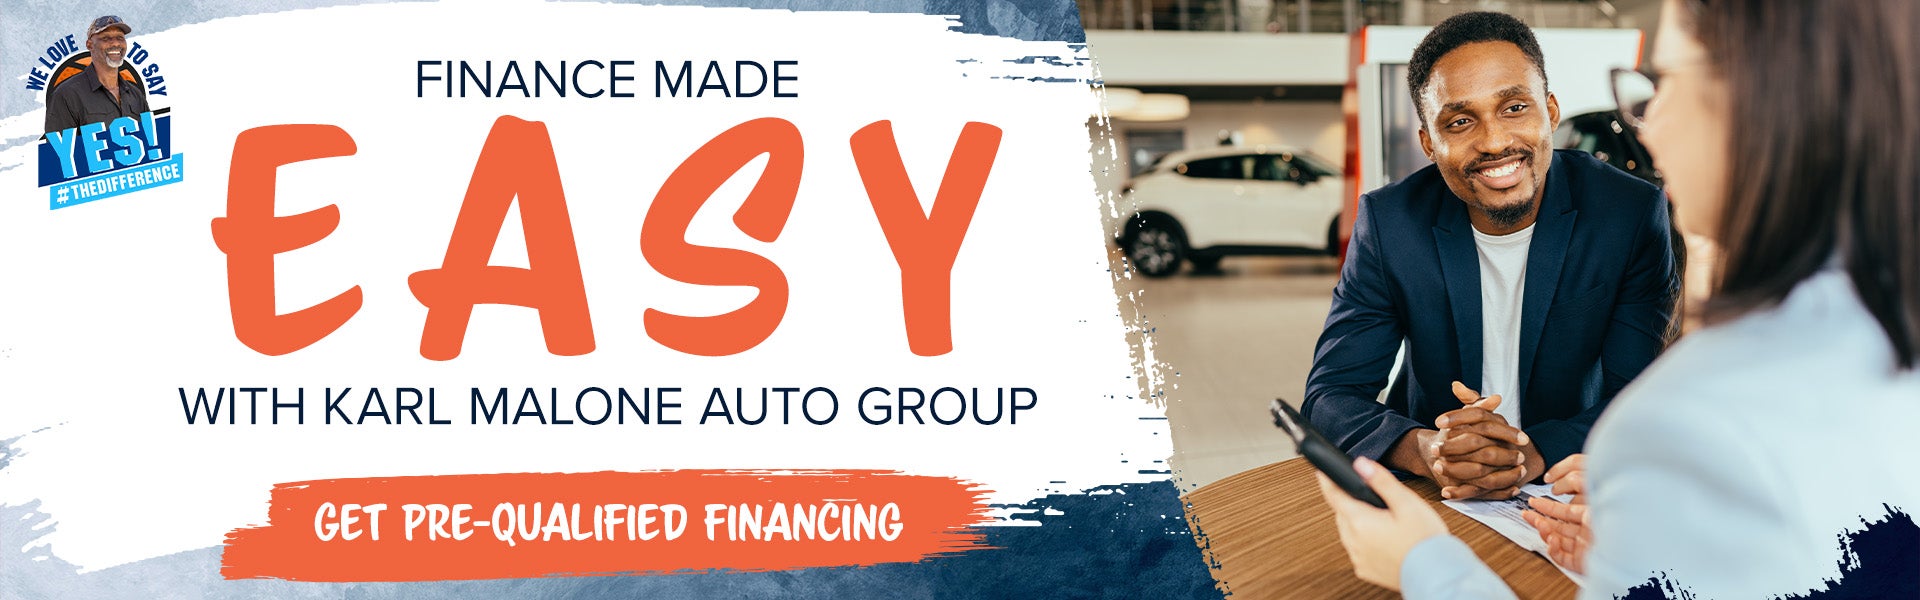 We make getting pre-qualified financing EASY!